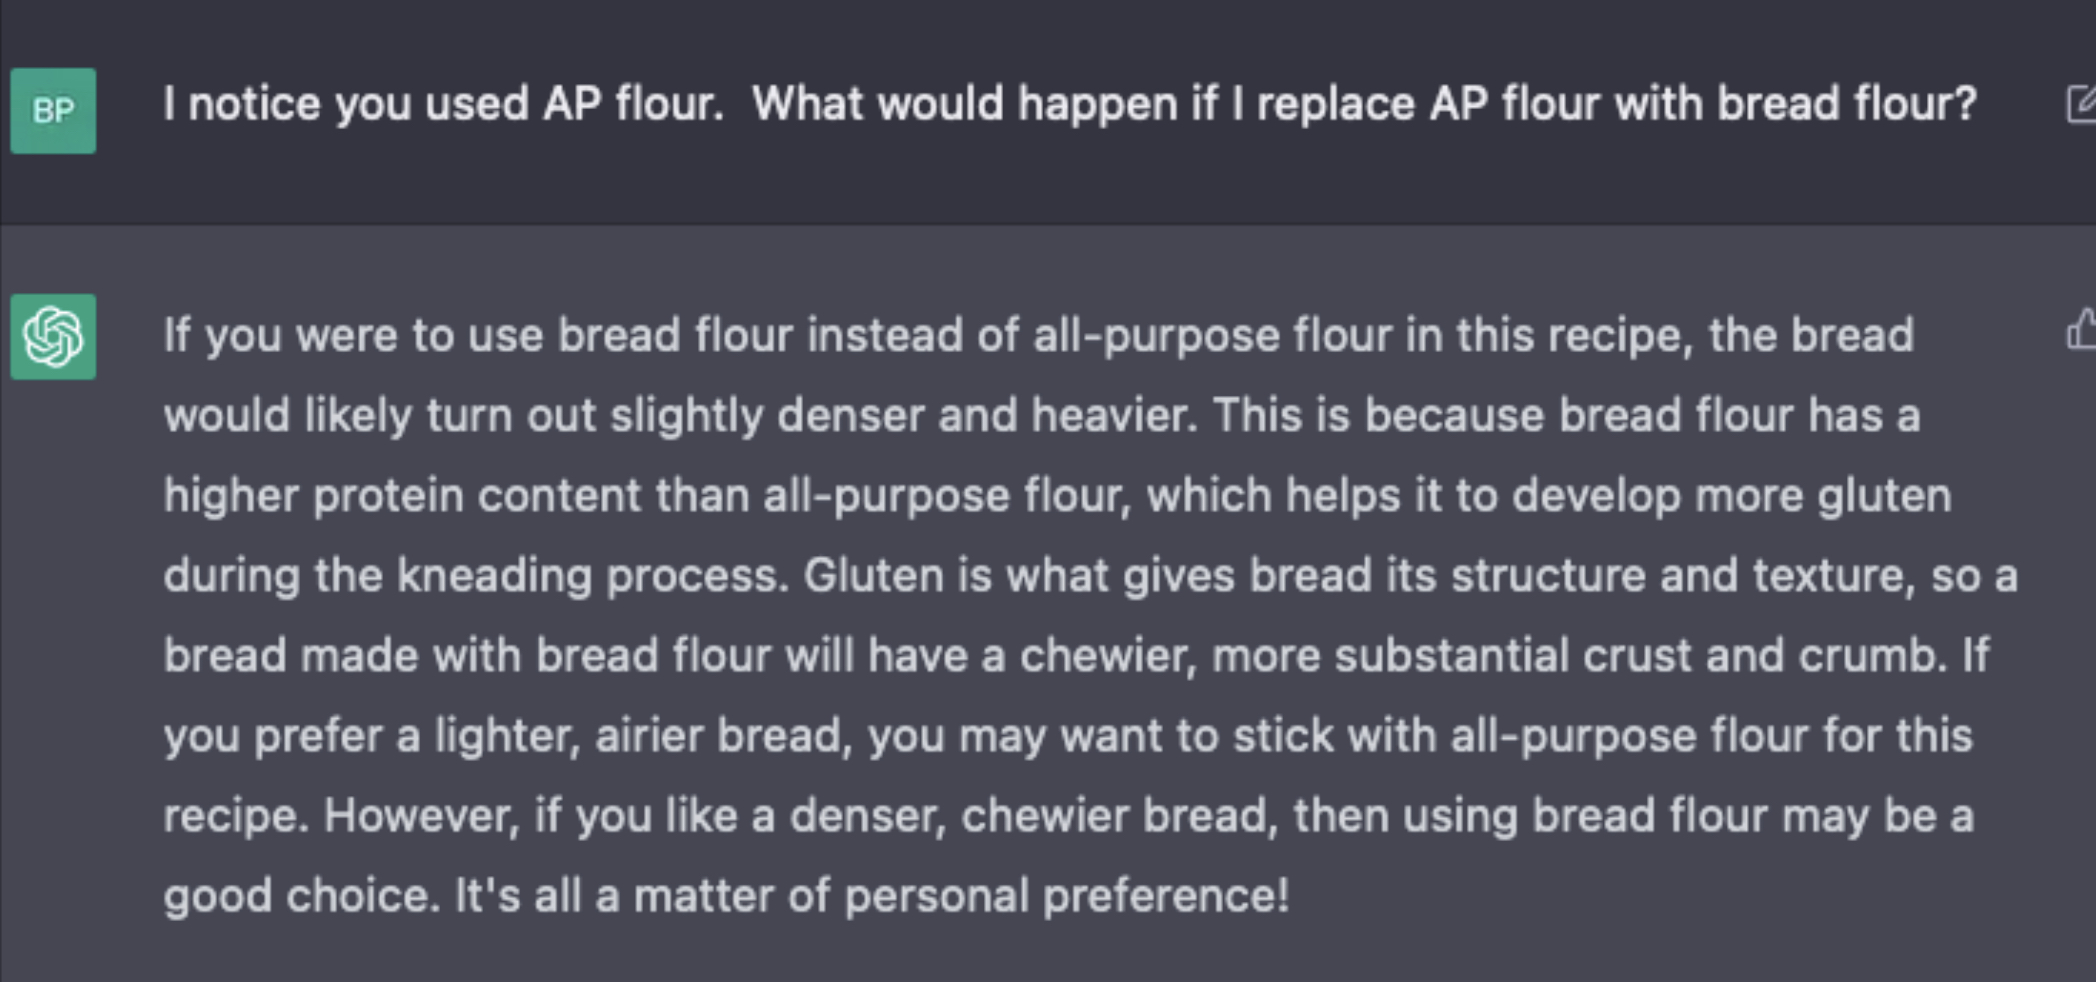 Response on using bread flour instead of AP flour